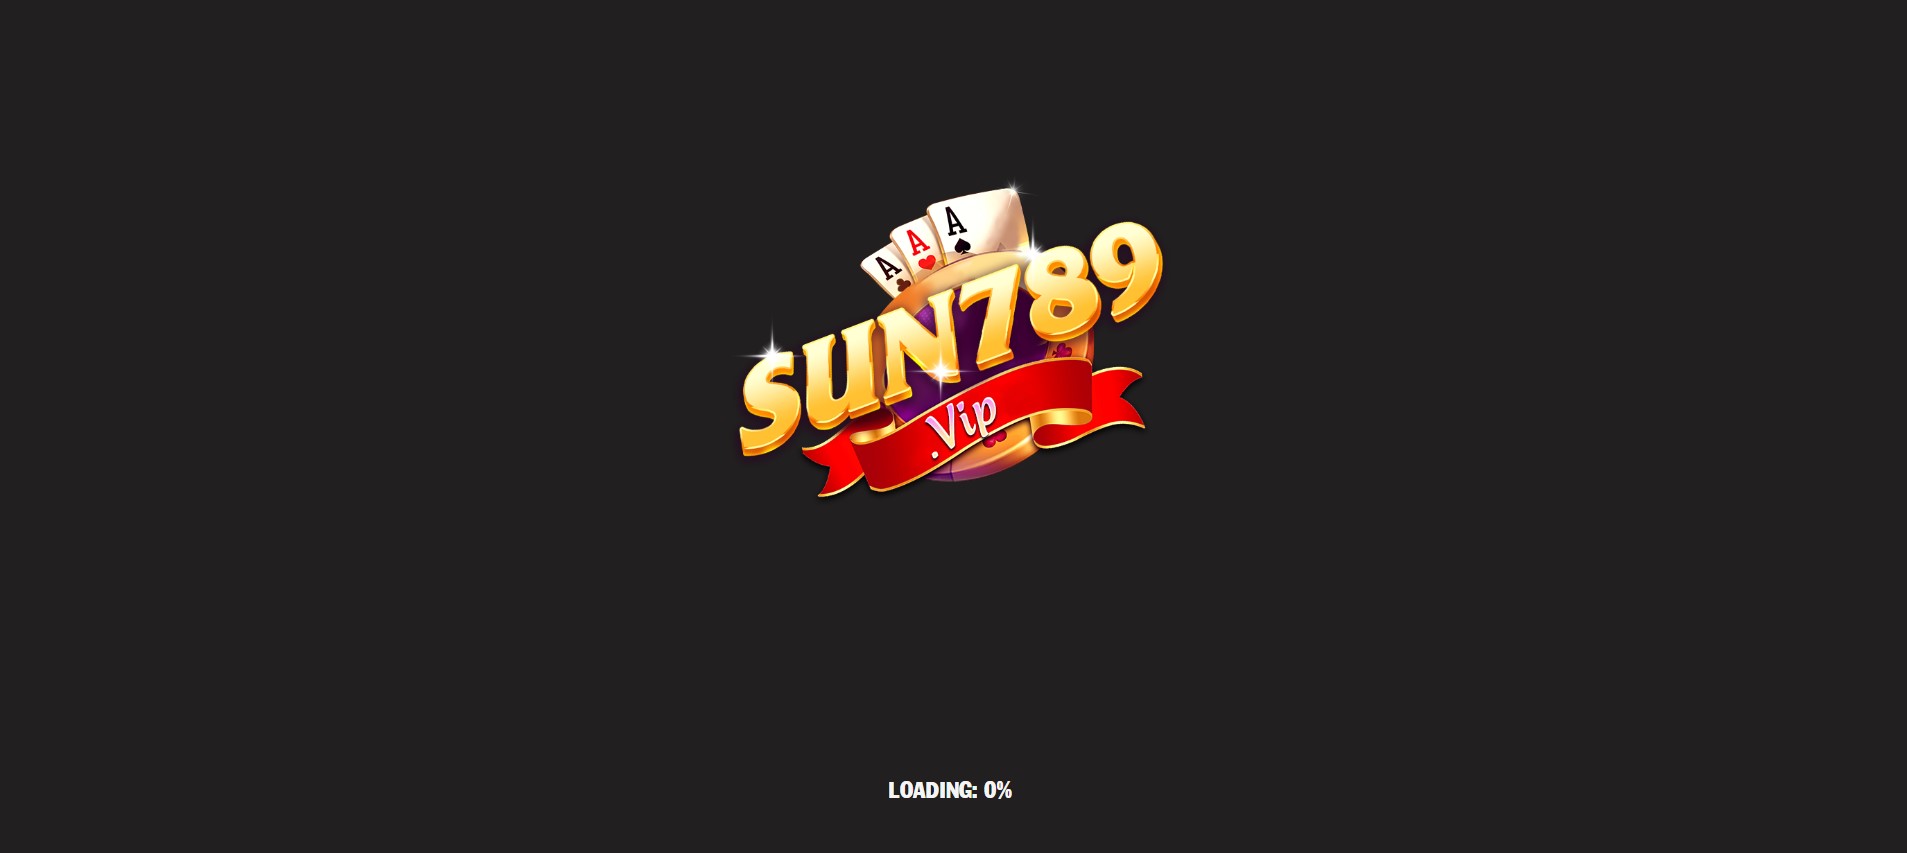 Giới thiệu Sun789 vip